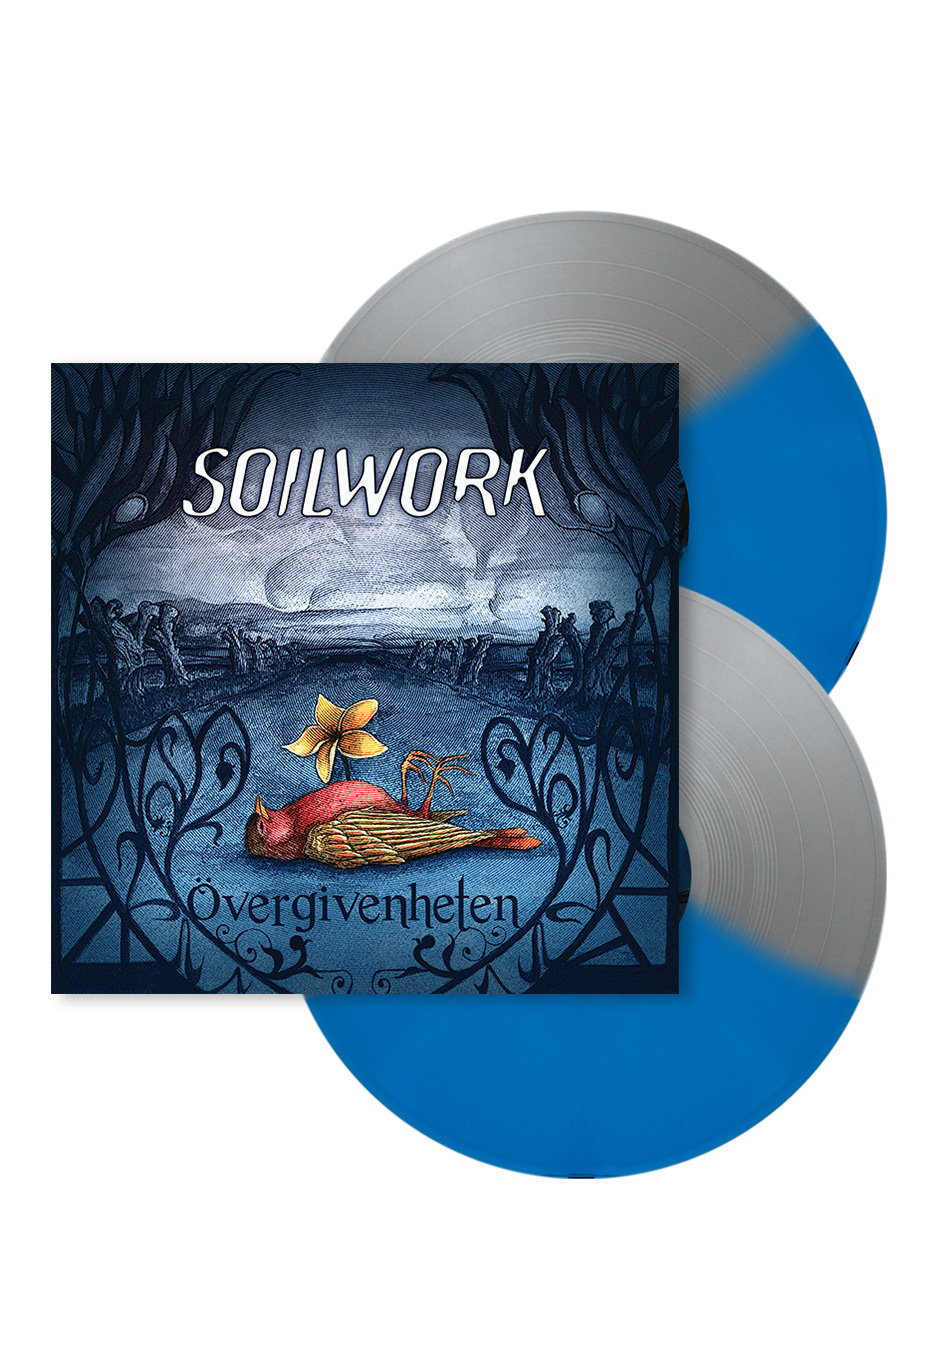 Soilwork - Övergivenheten Ltd. Blue/Silver Split - Colored 2 Vinyl